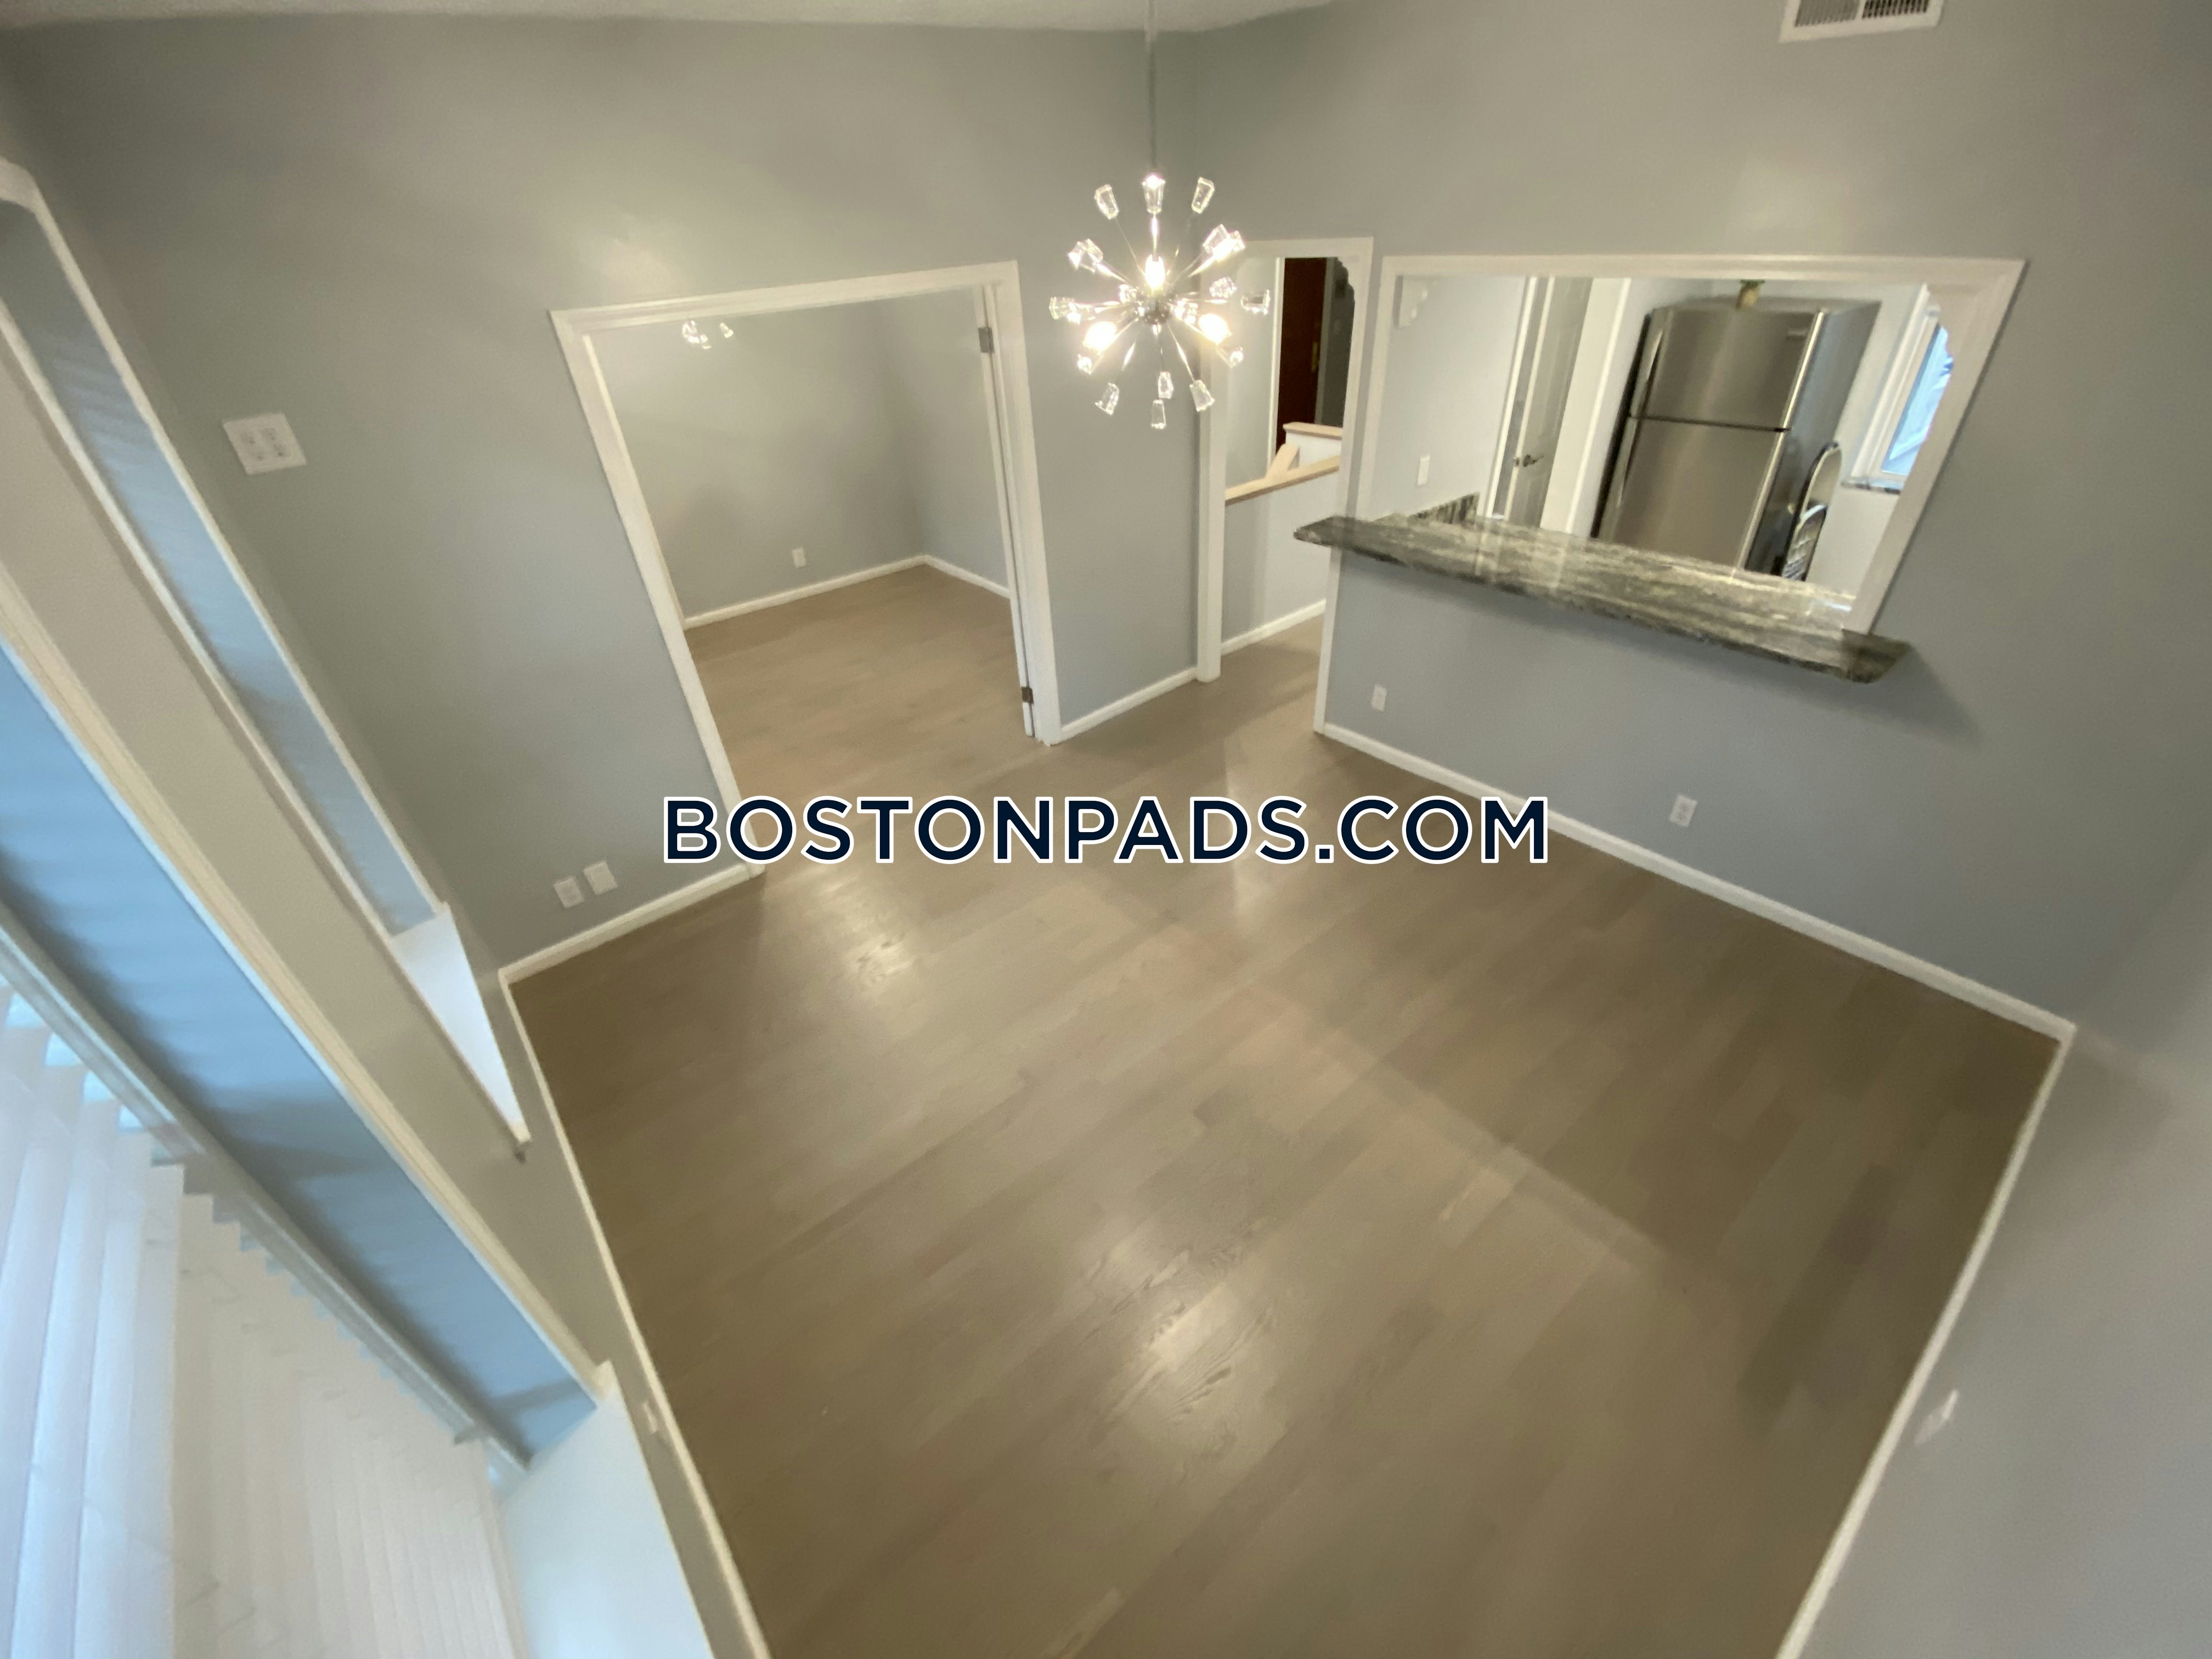 Boston - $4,000